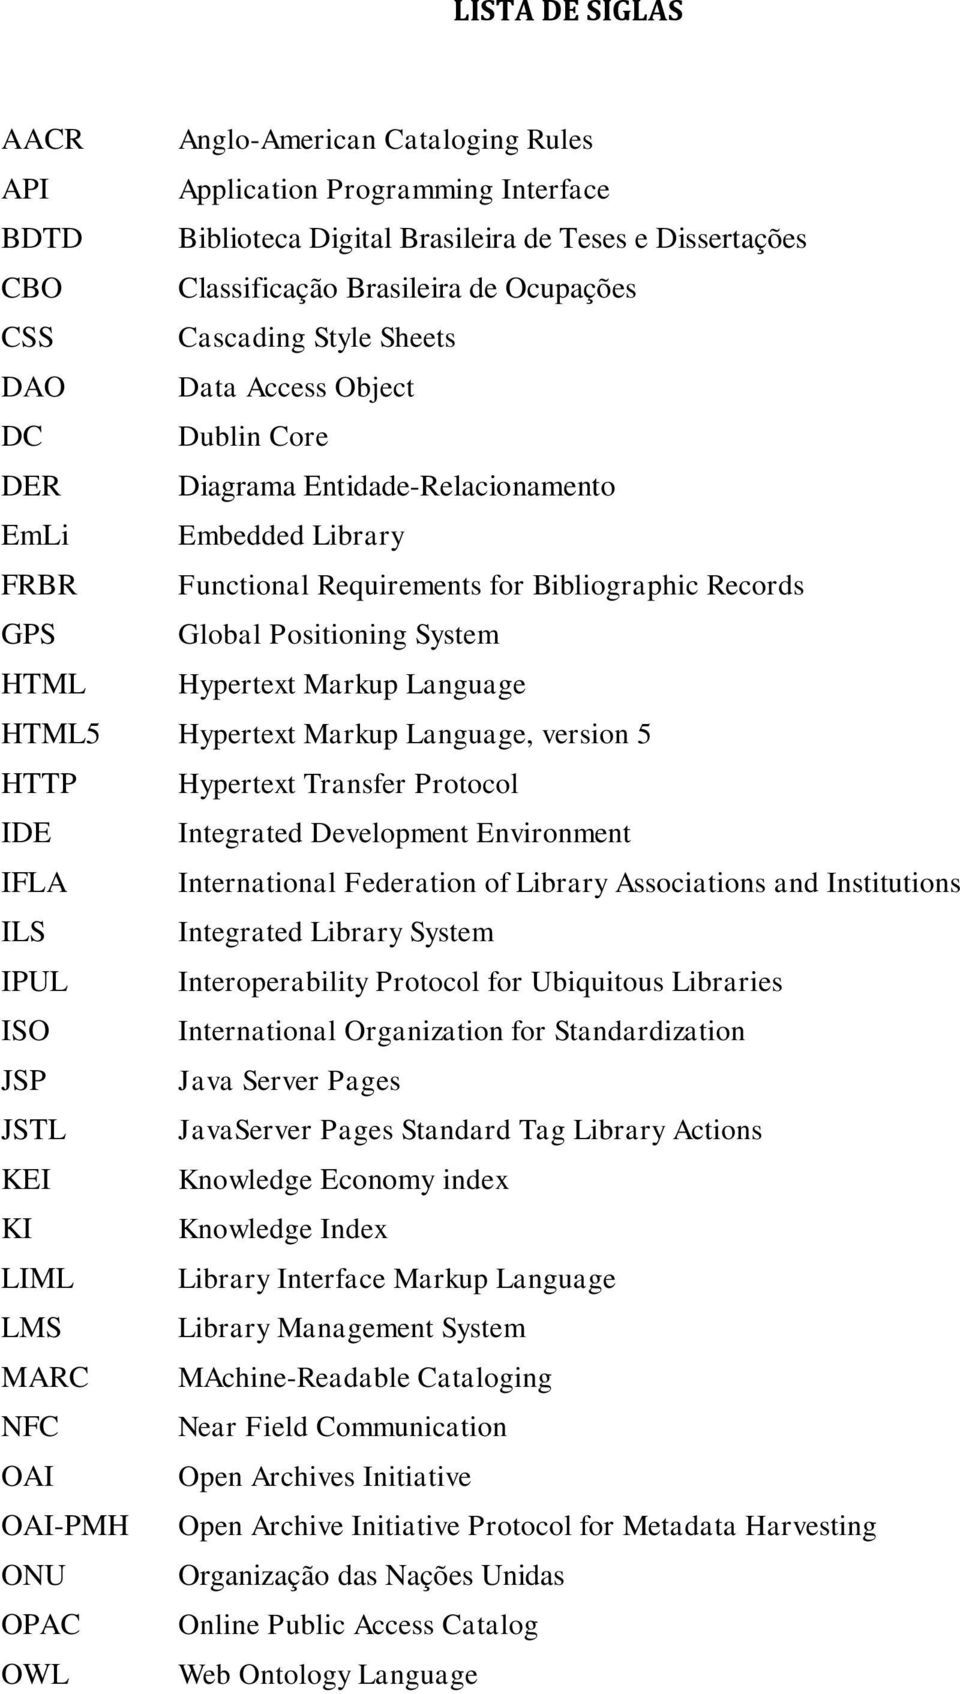 System HTML Hypertext Markup Language HTML5 Hypertext Markup Language, version 5 HTTP Hypertext Transfer Protocol IDE Integrated Development Environment IFLA International Federation of Library